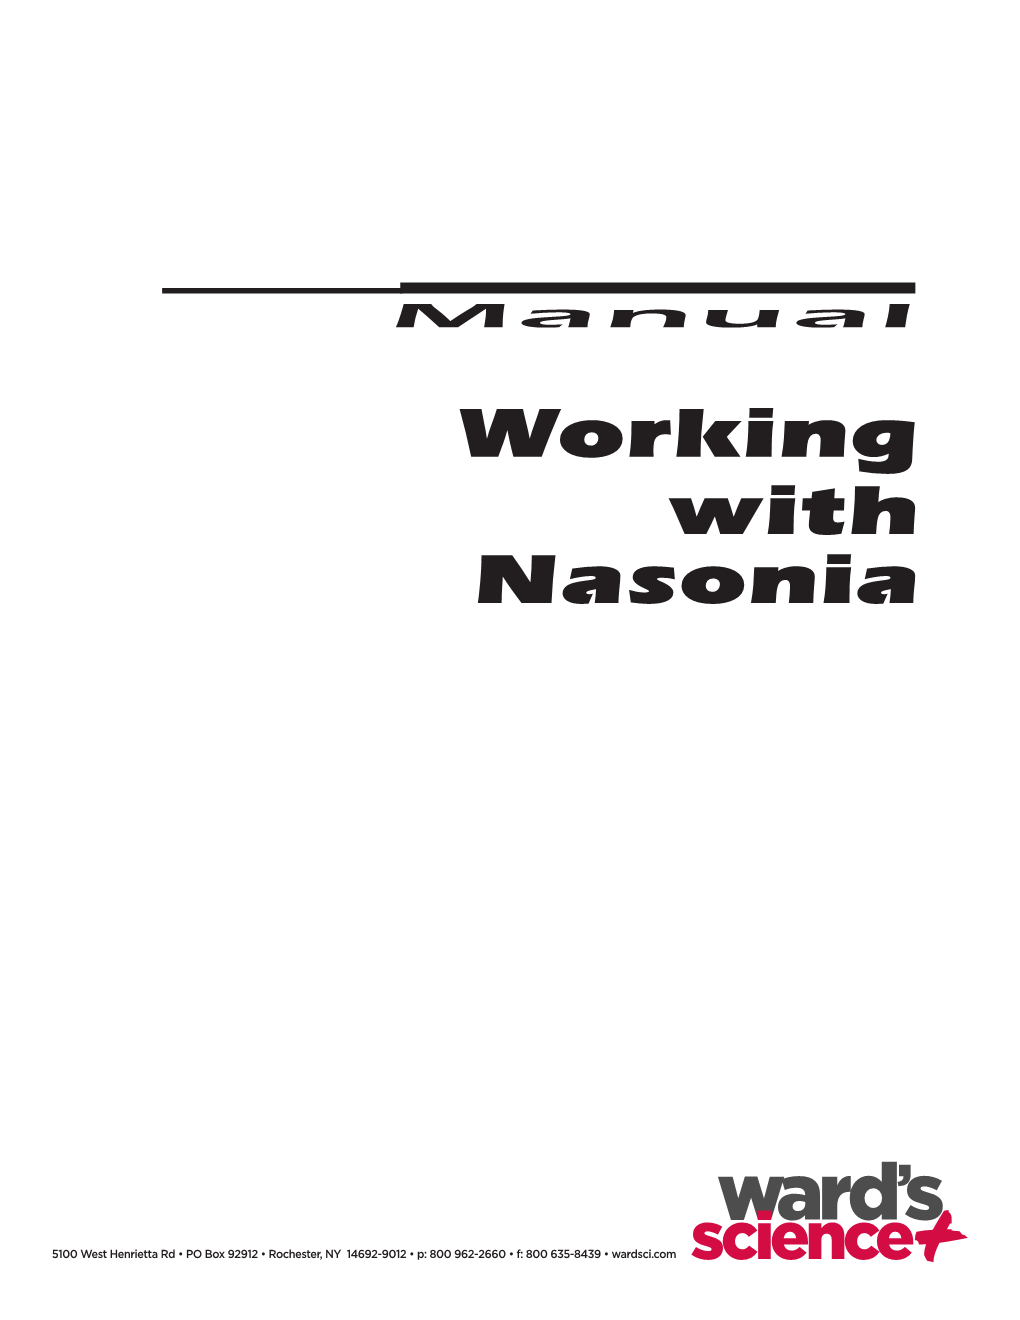 Working with Nasonia